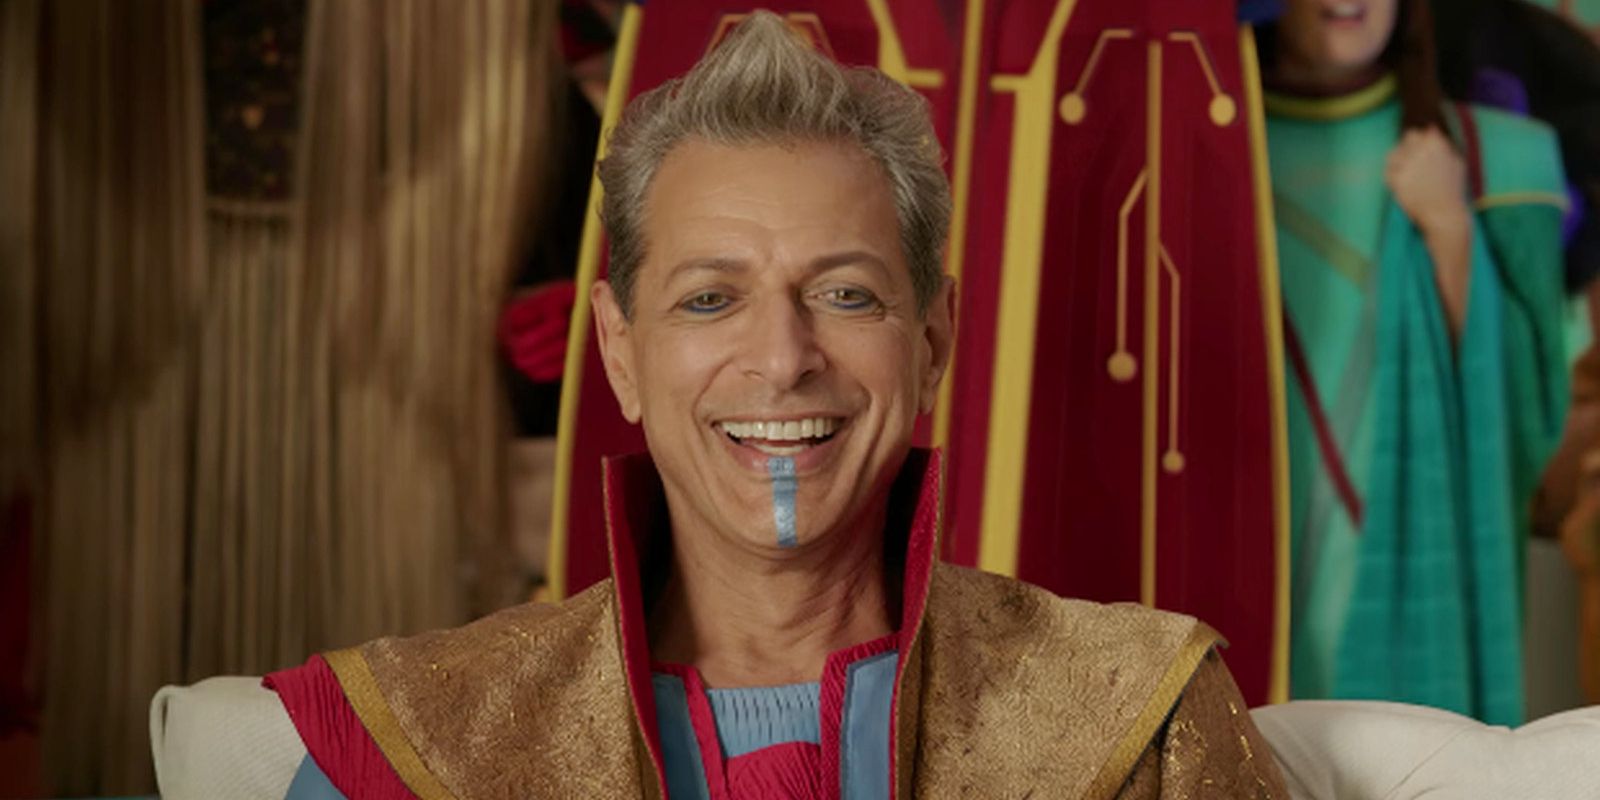 Jeff Goldblum as the grandmaster in Thor: Ragnarok